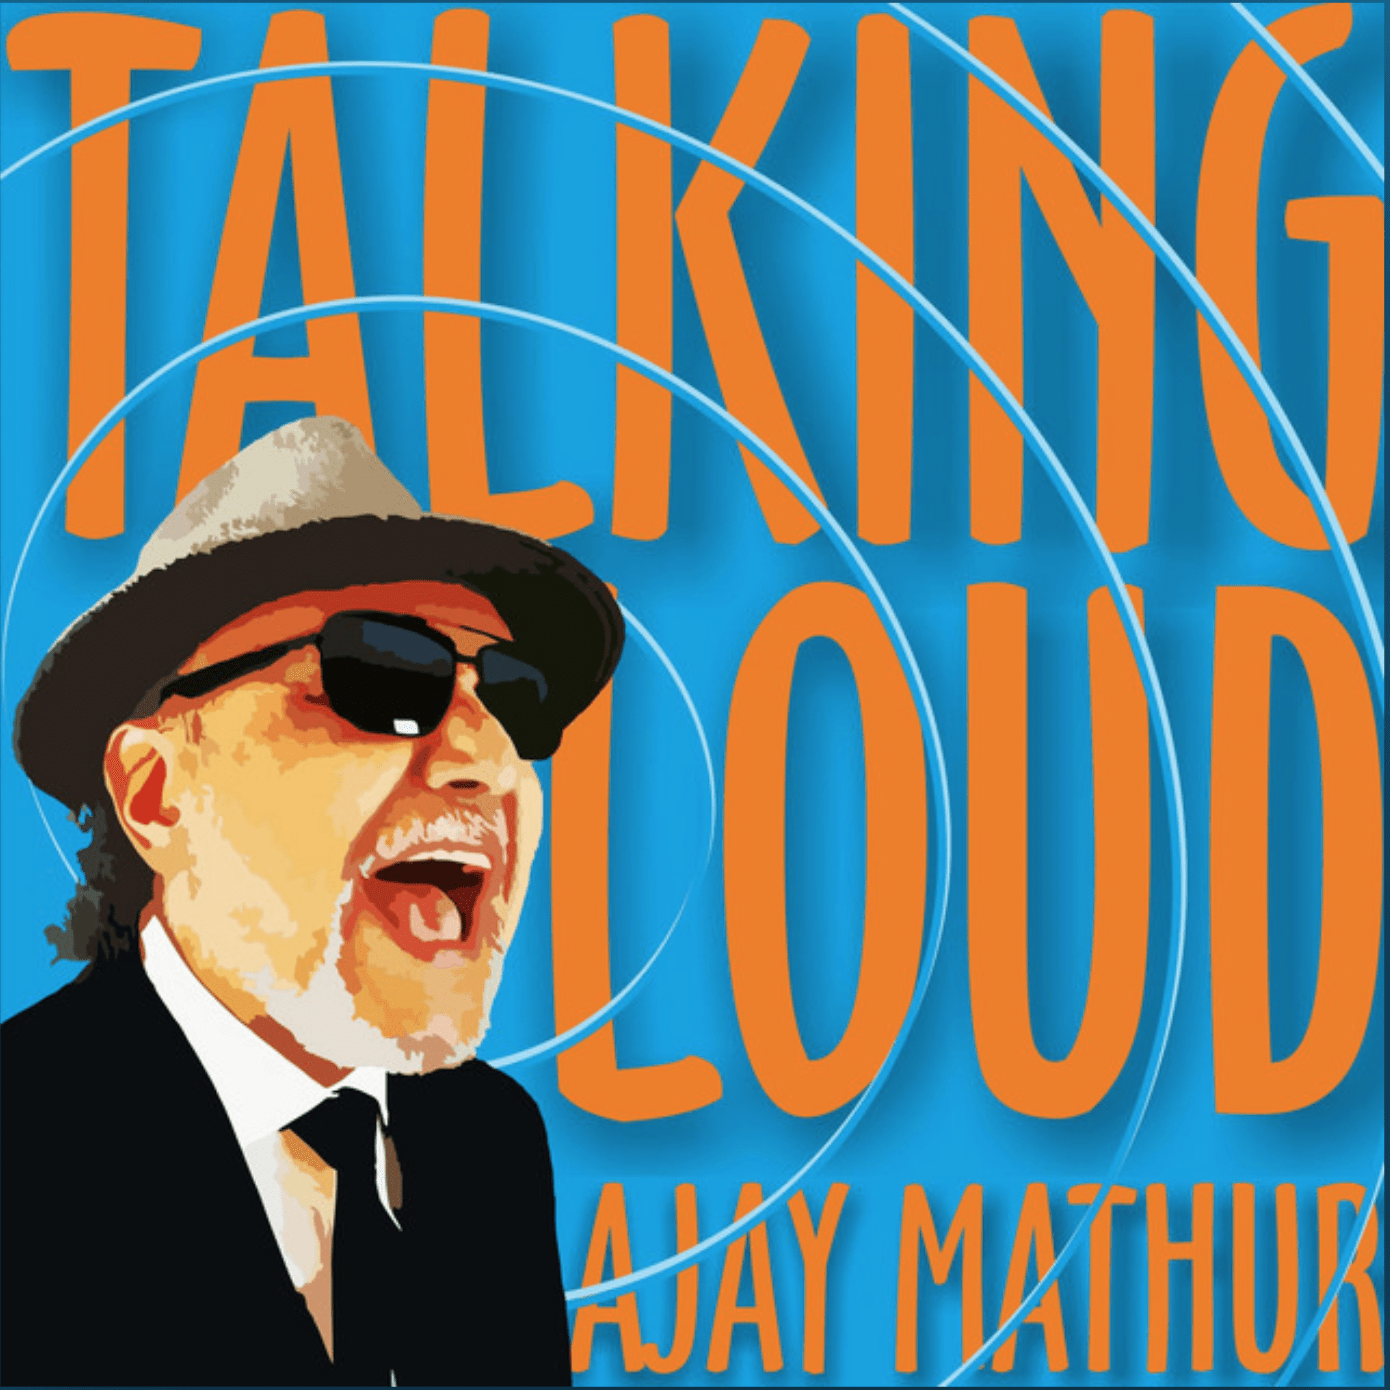 Ajay Mathur Talking Loud (Original Album)